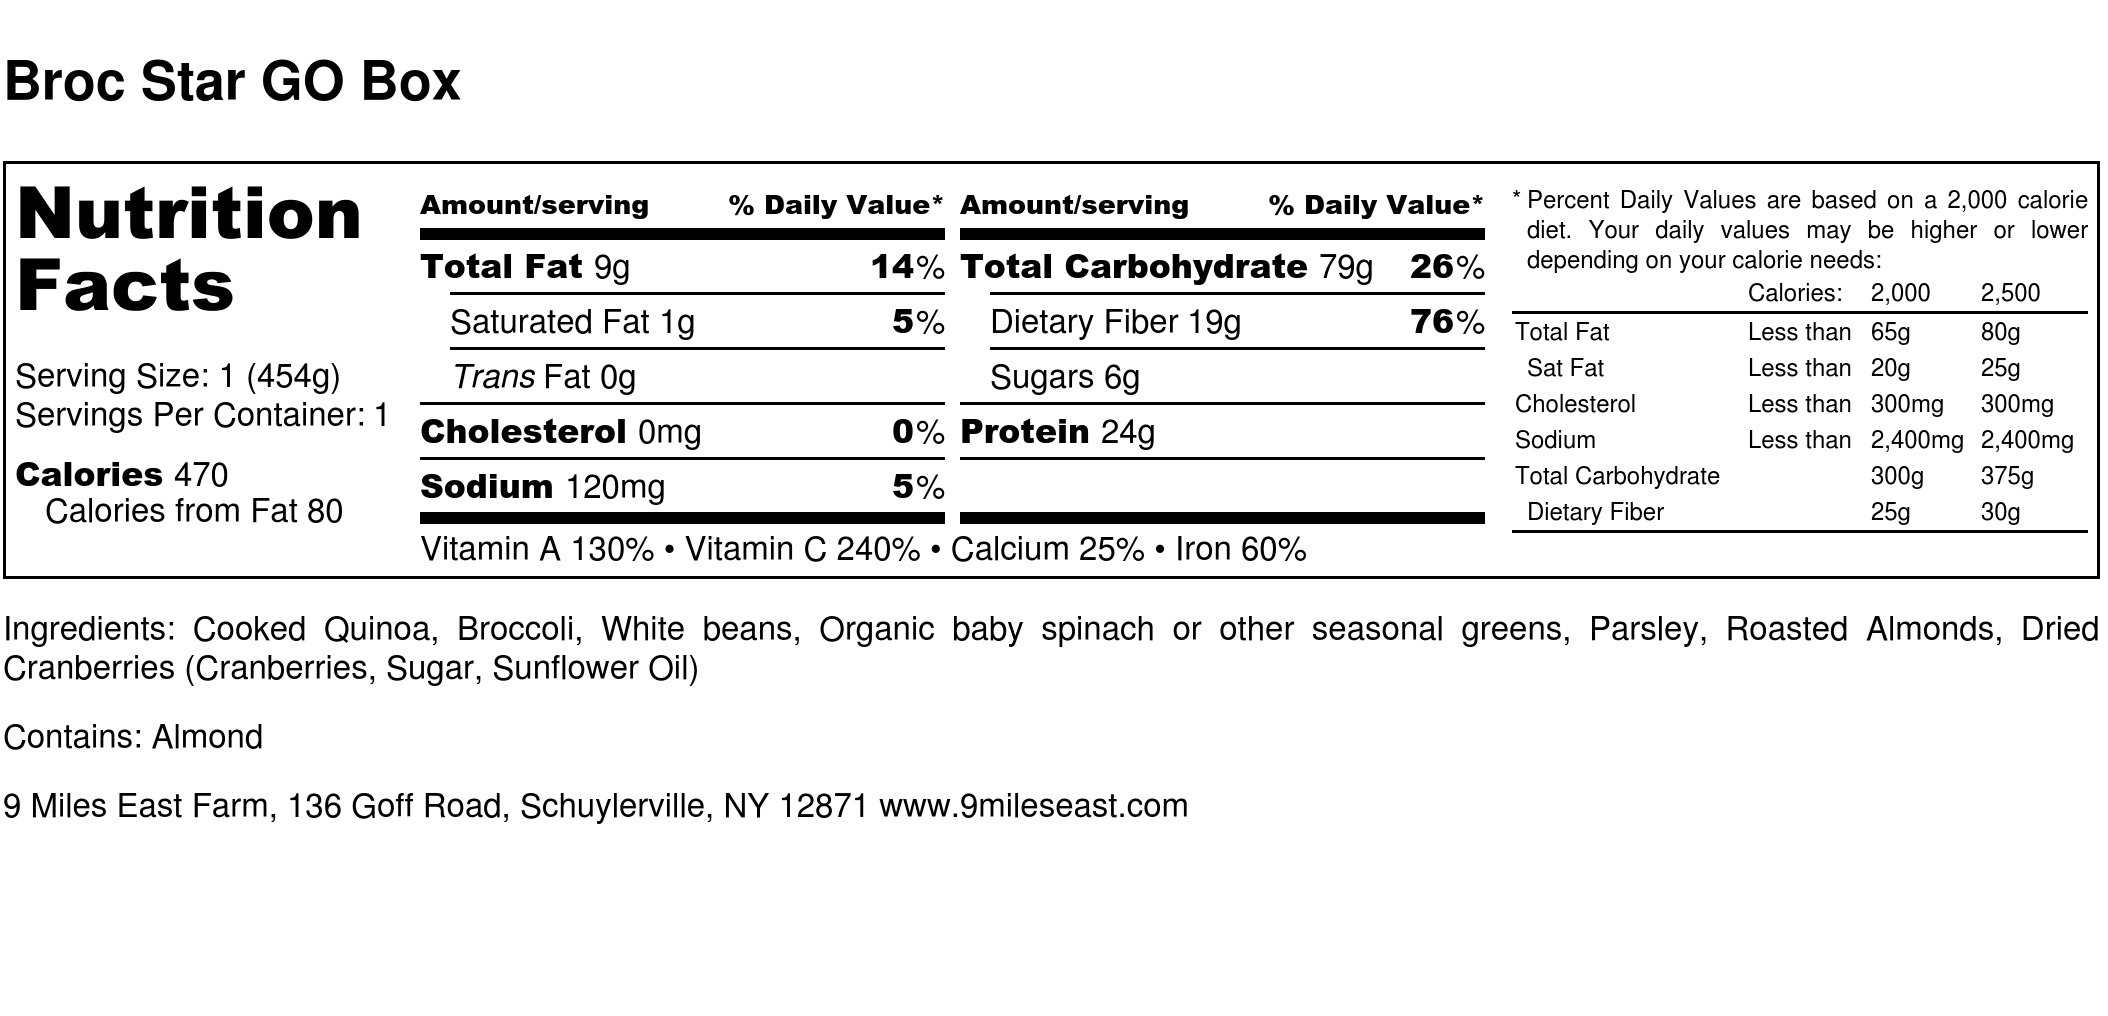 Broc Star GO Box - Nutrition Label.jpg